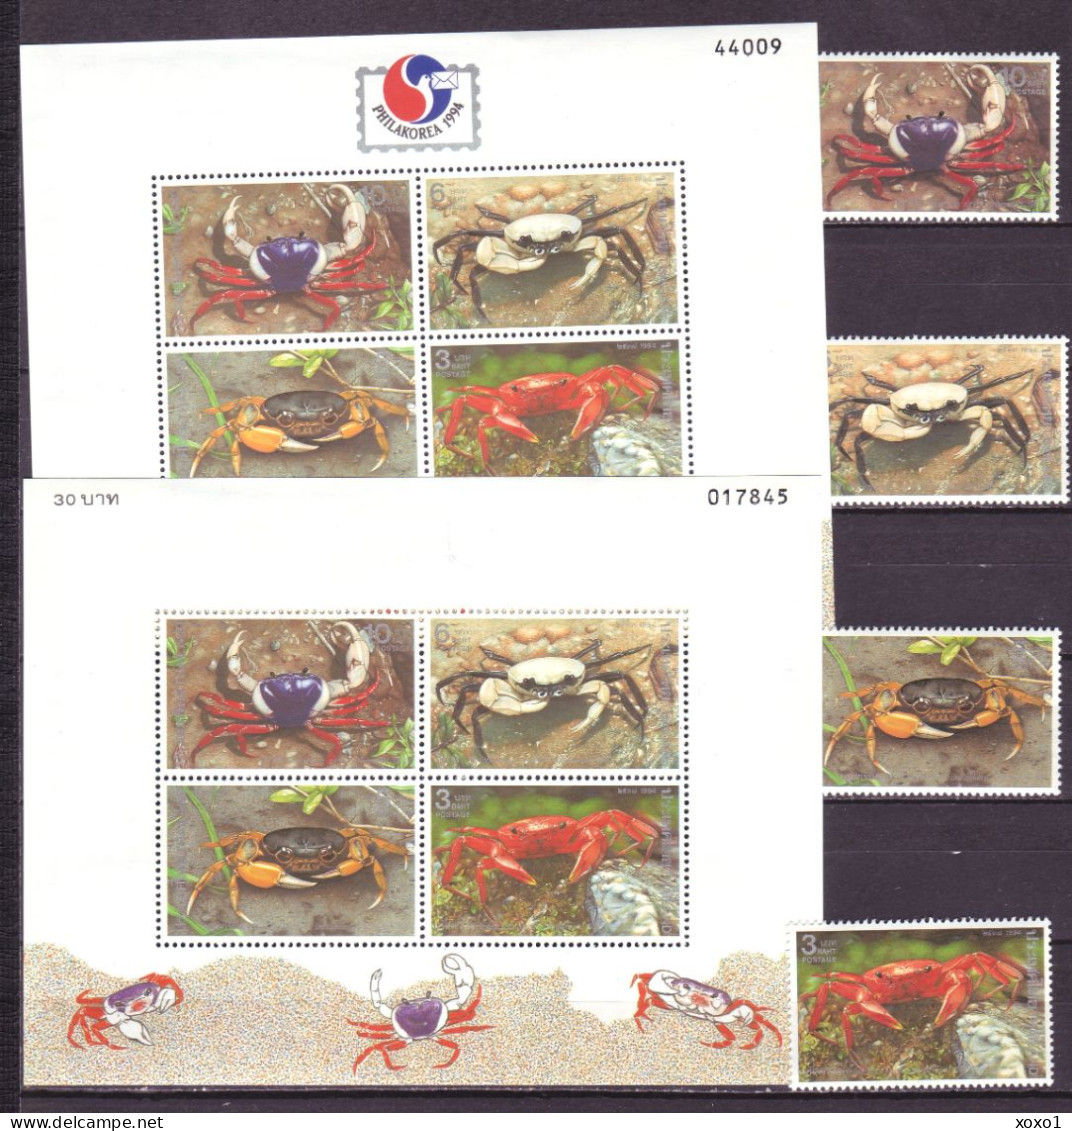 Thailand 1994 MiNr. 1603 - 1606 ( Block 58-58 I ) Marine Life, Crustaceans, Crabs 4v+2s\sh  MNH** 17,20 € - Crustaceans